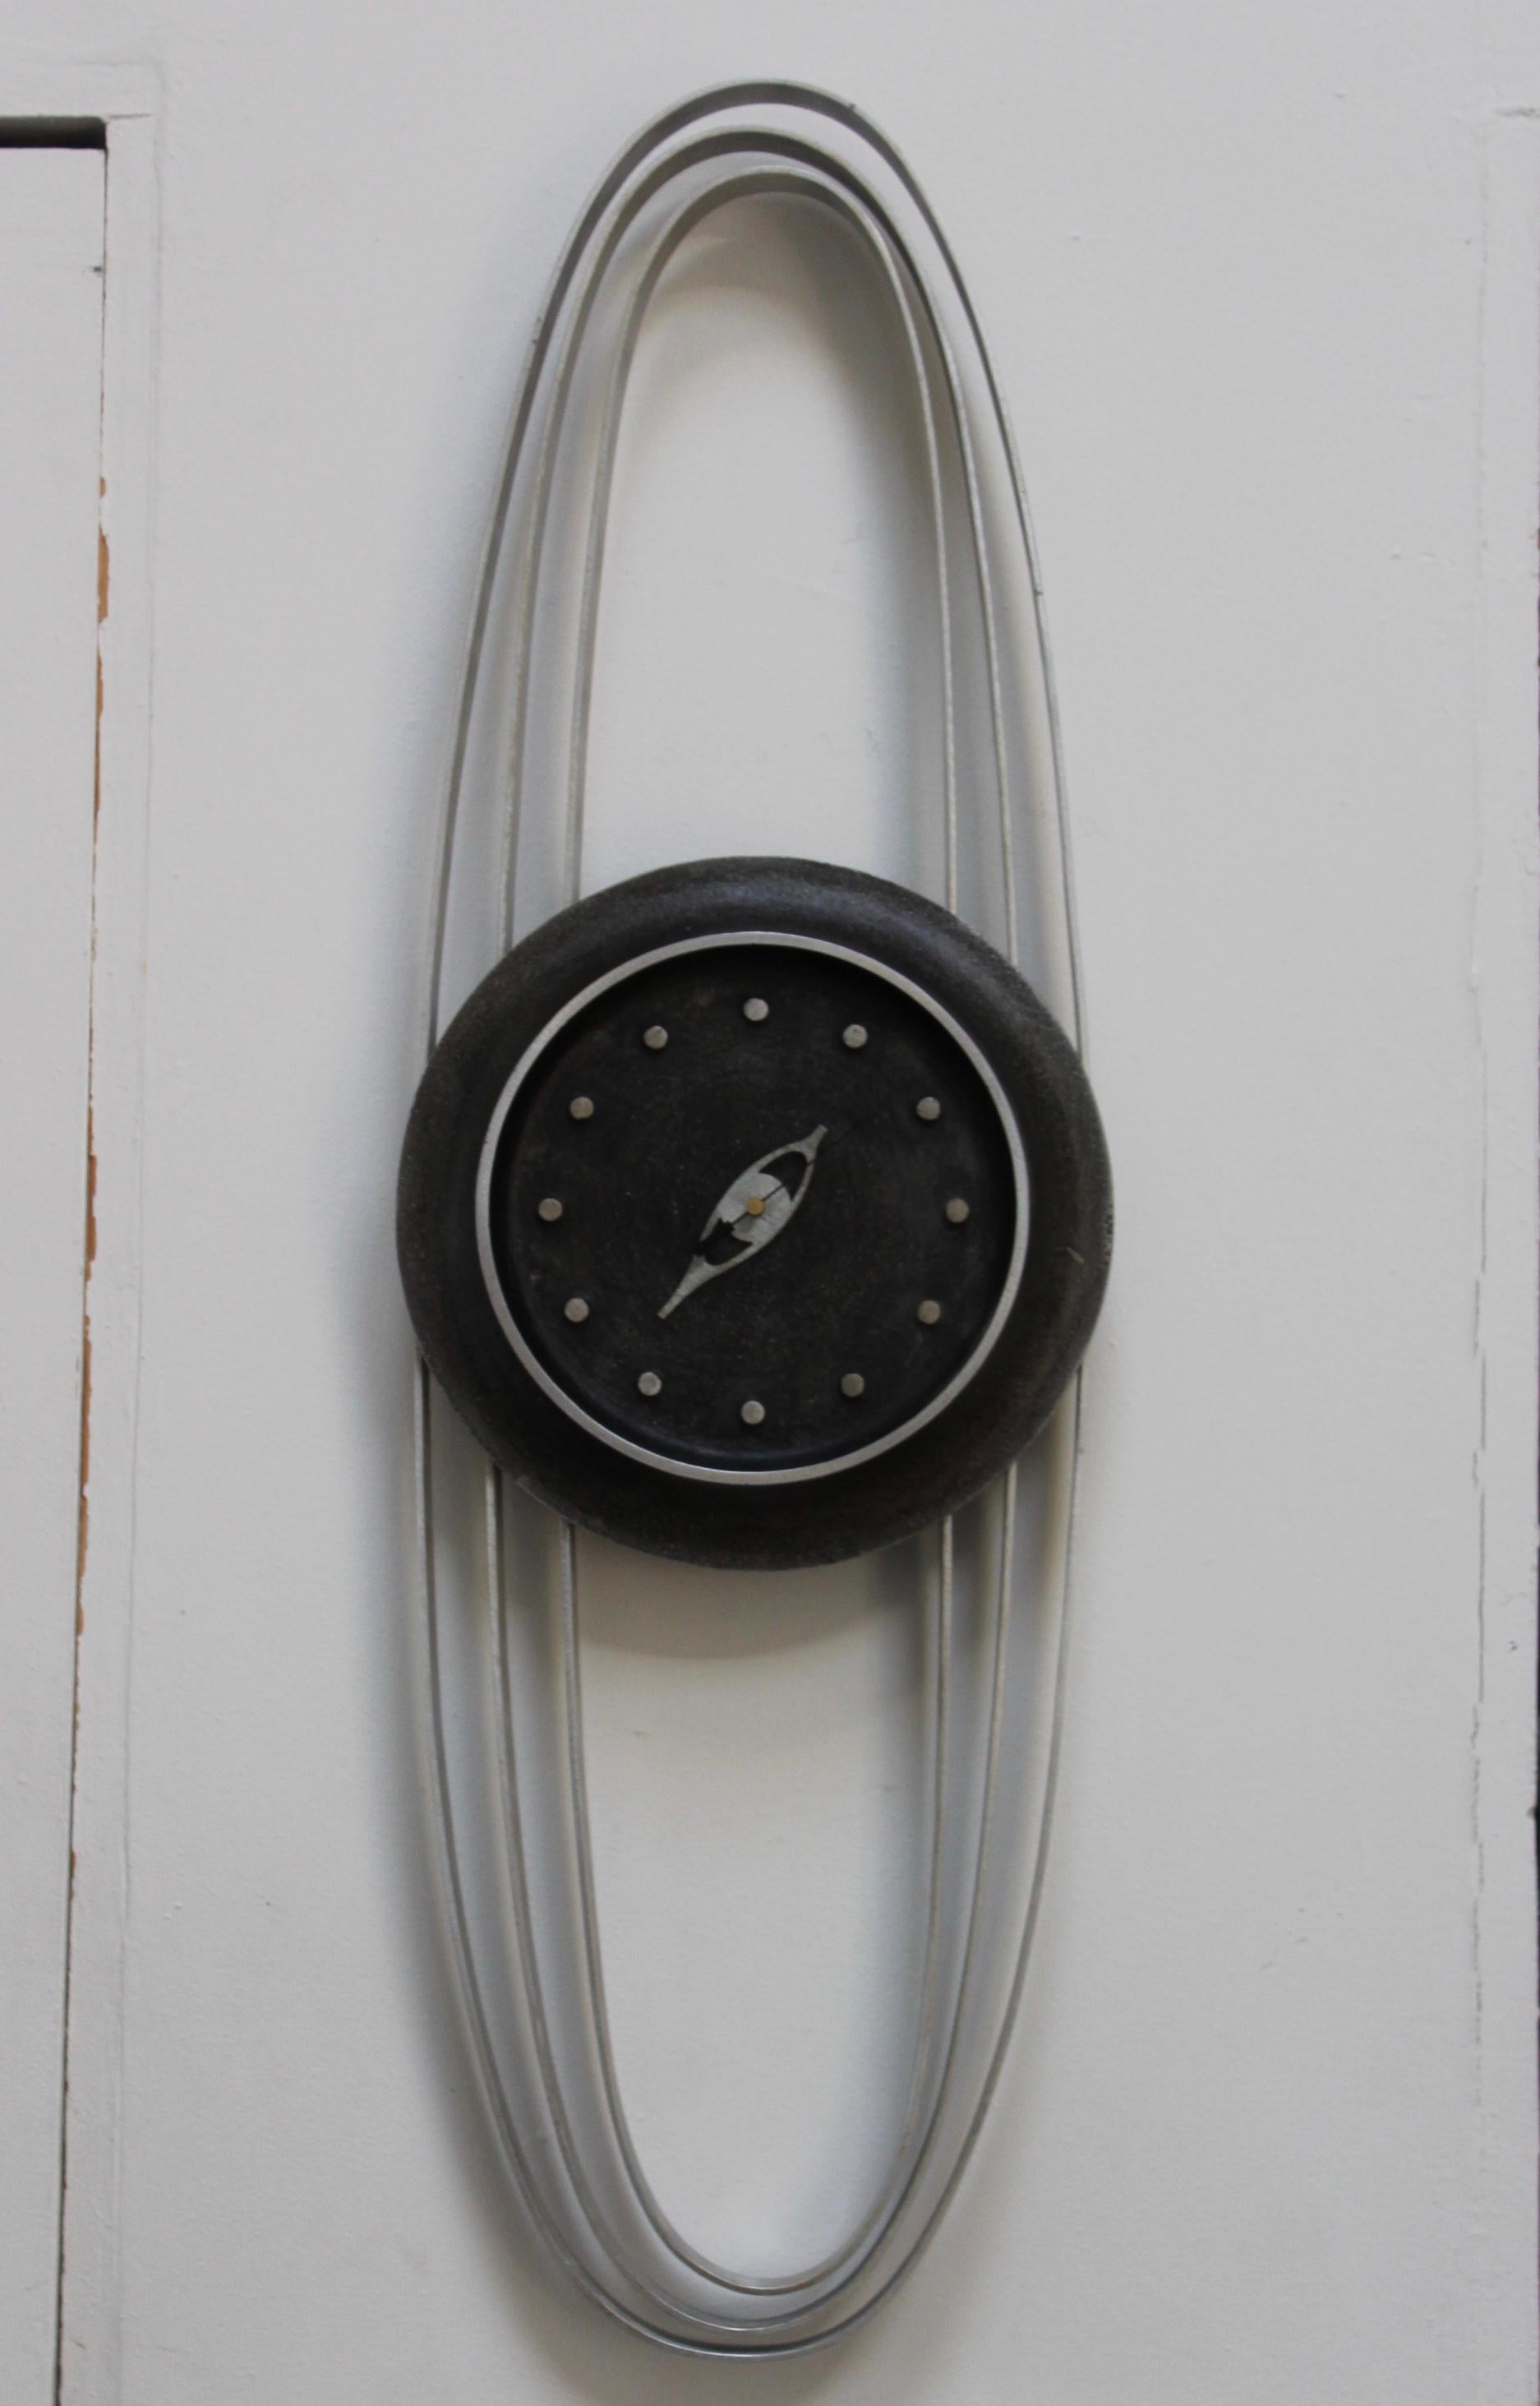 1970s Mid-Century Modern aluminum wall clock designed by Paolo Rizzato.